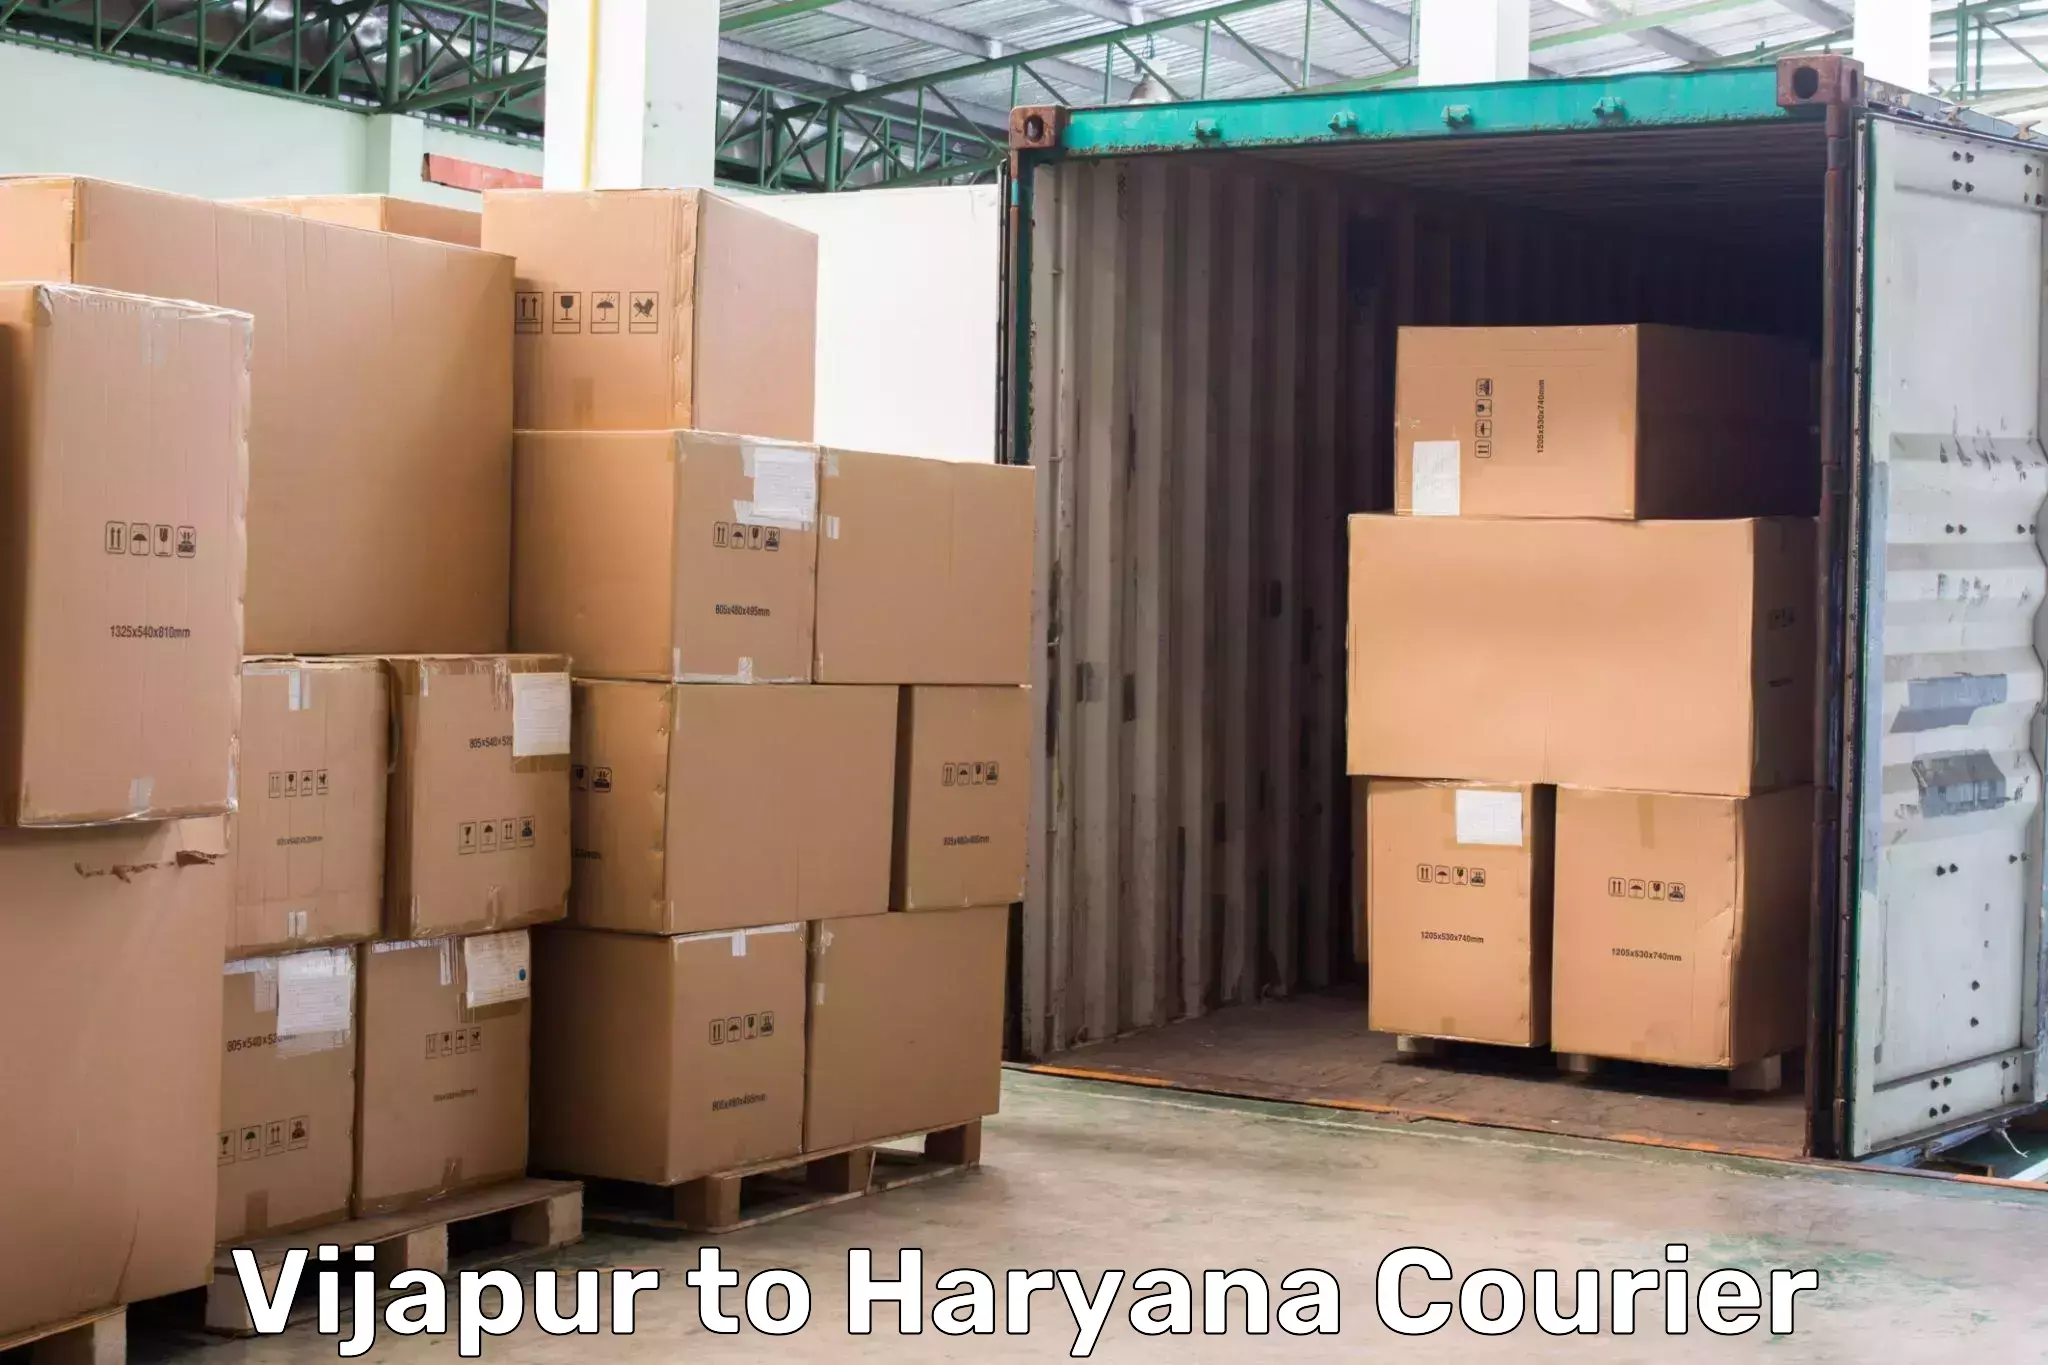 Courier service comparison in Vijapur to Haryana